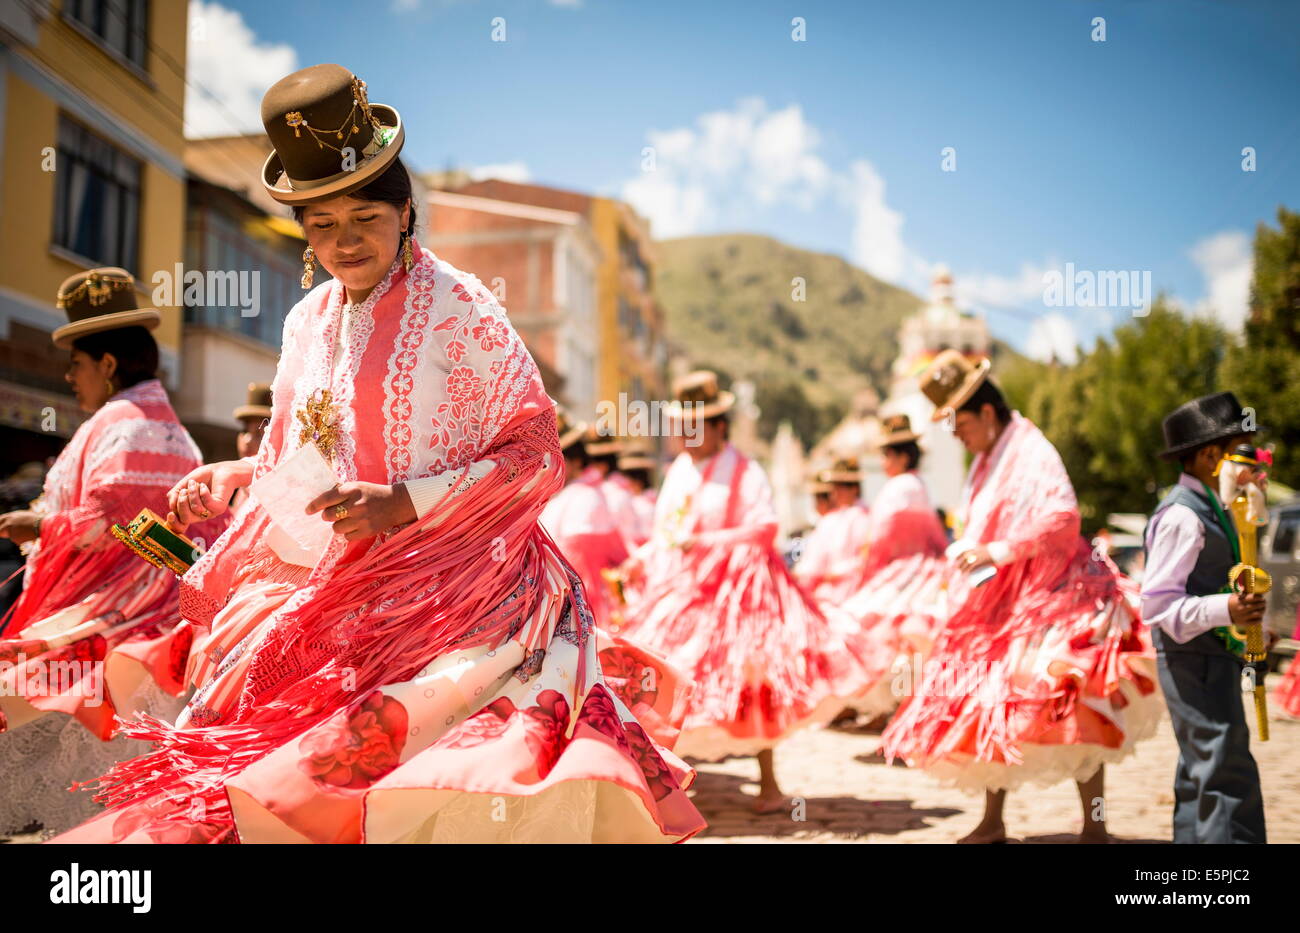 Tänzer in Tracht, Fiesta De La Virgen De La Candelaria, Copacabana, Titicacasee, Bolivien, Südamerika Stockfoto